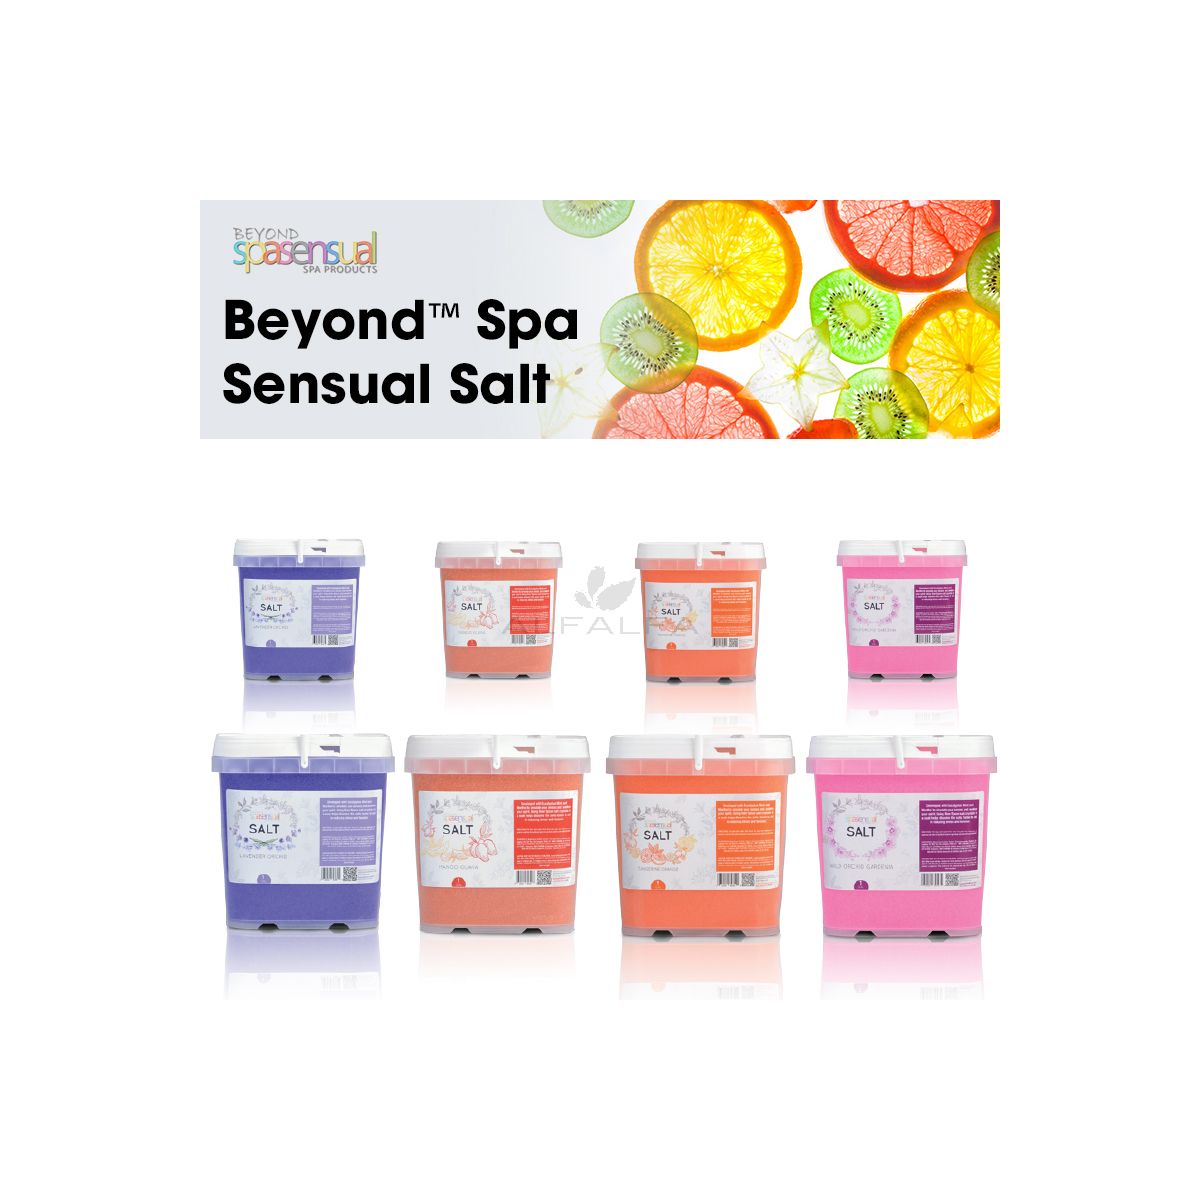 Beyond Spa Sensual Salt